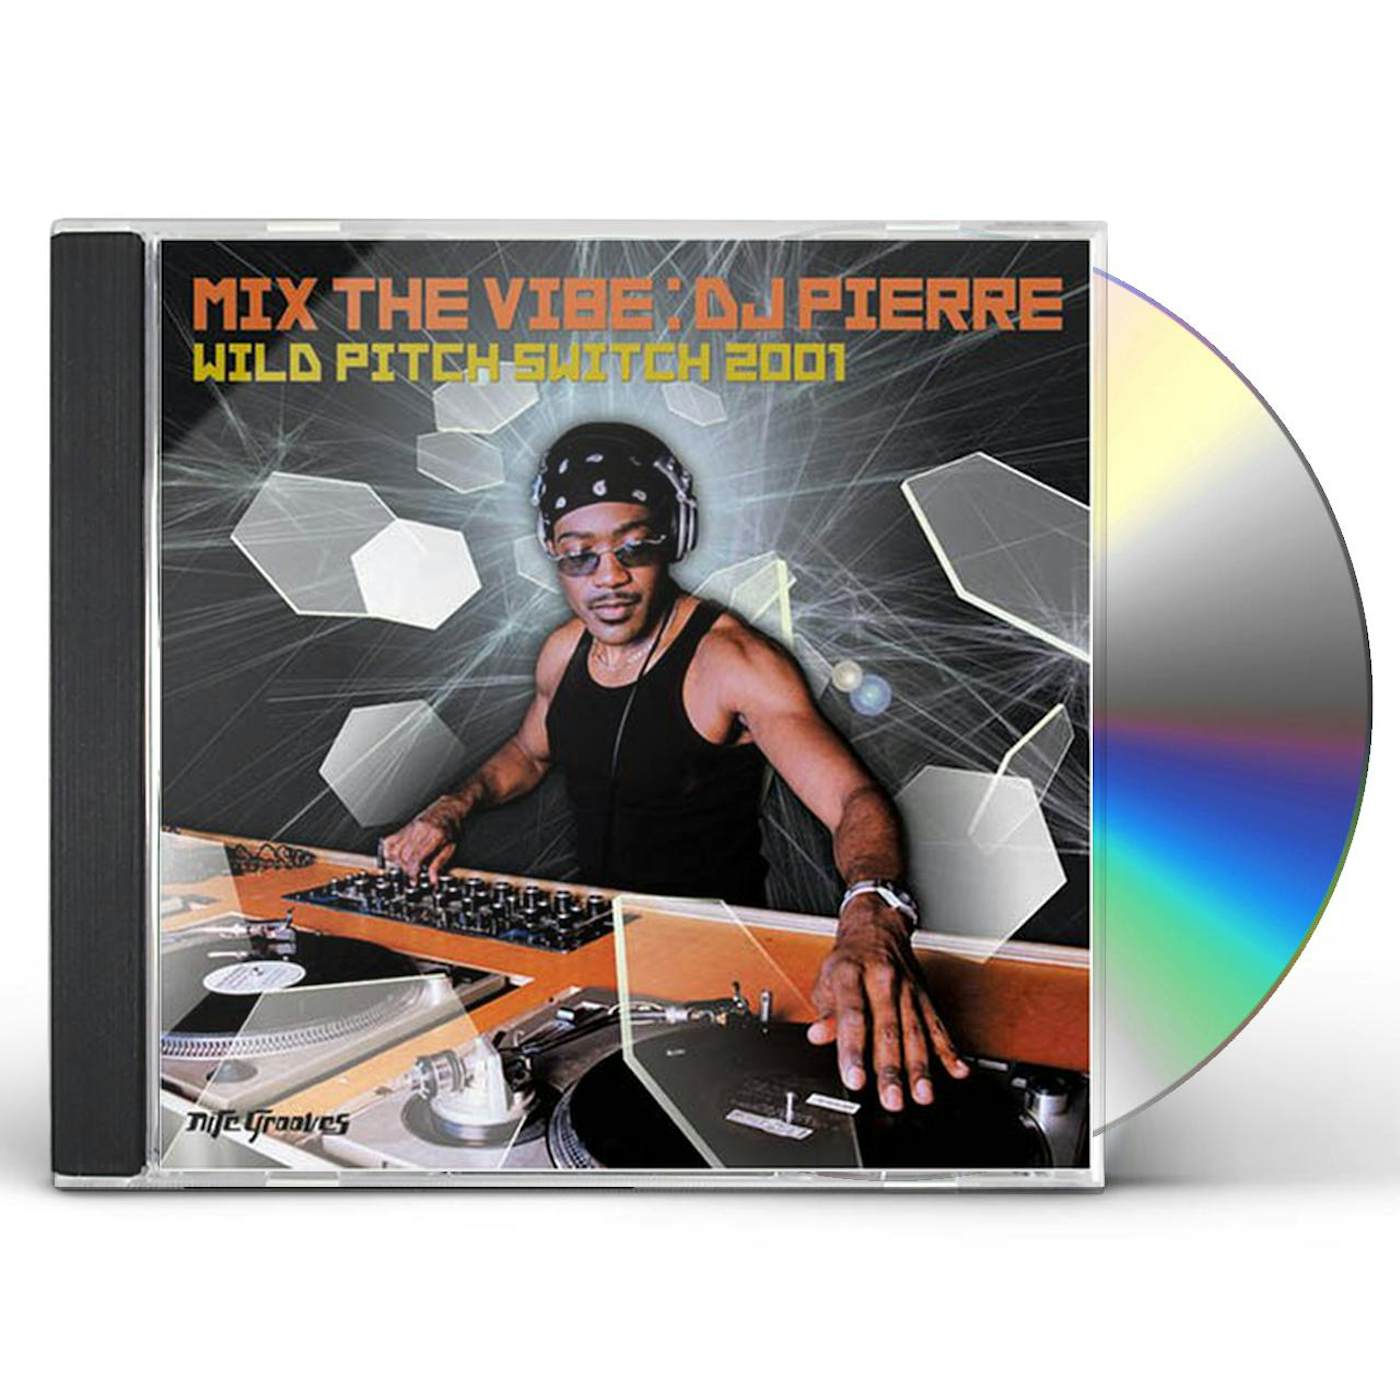 DJ Pierre MIX THE VIBE: WILD PITCH SWITCH 2001 CD